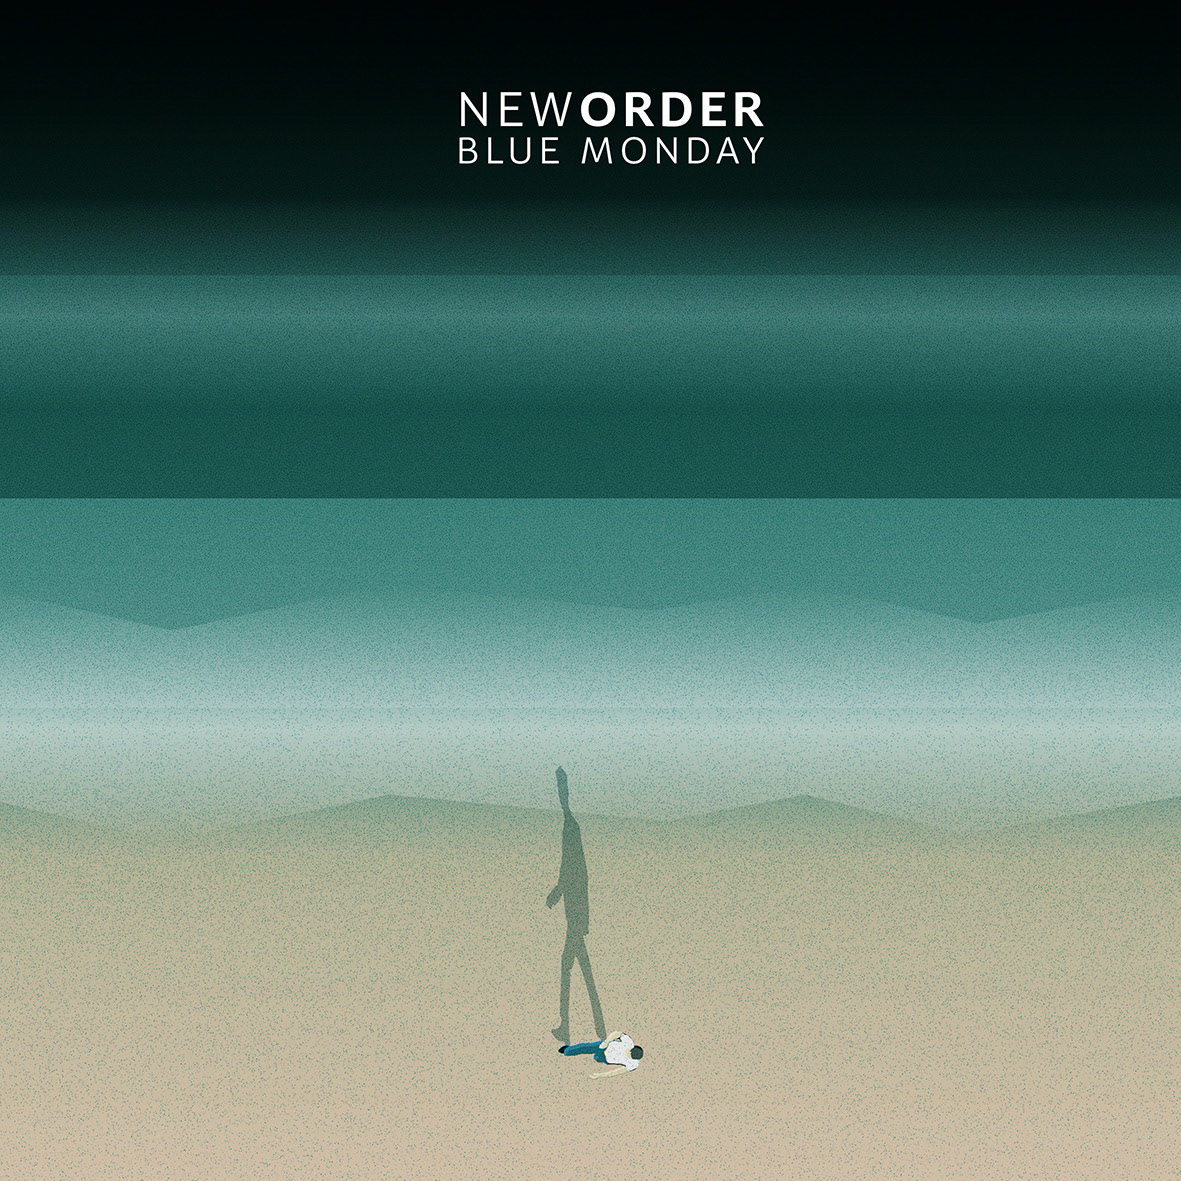 New order blue monday remix. New order - Blue Monday '88. New order* - Blue Monday 1988. Песня Blue Monday New order. Blue Monday New order Slowed.